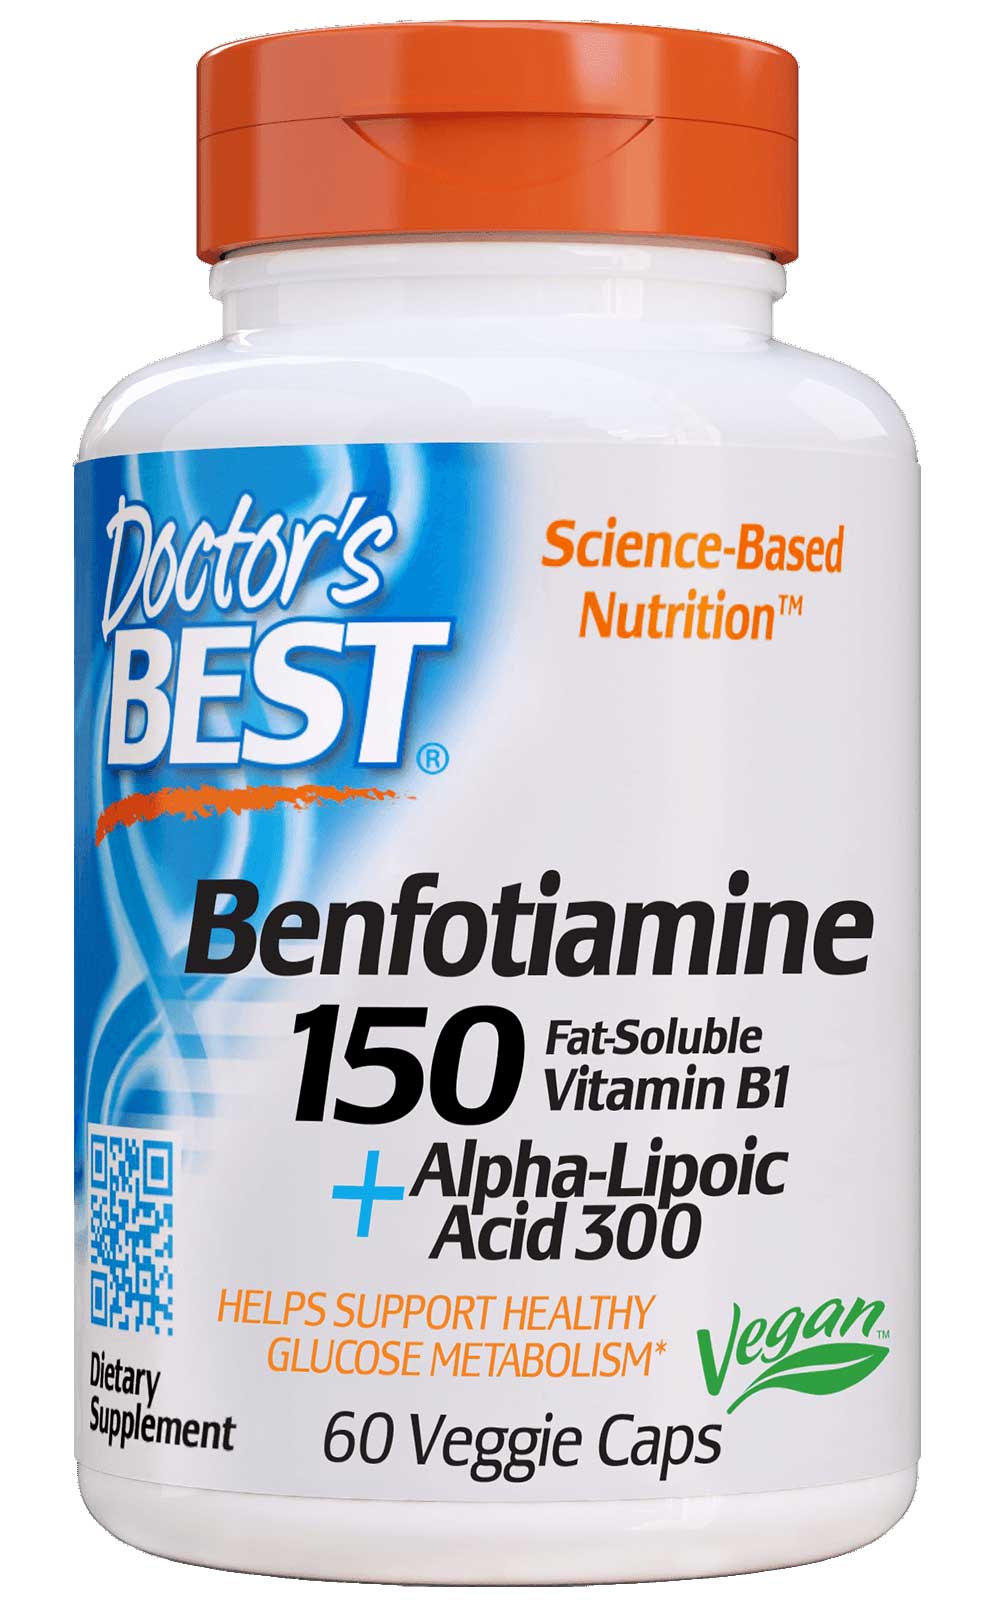 Doctor's Best Benfotiamine 150 + Alpha - Lipoic Acid 300